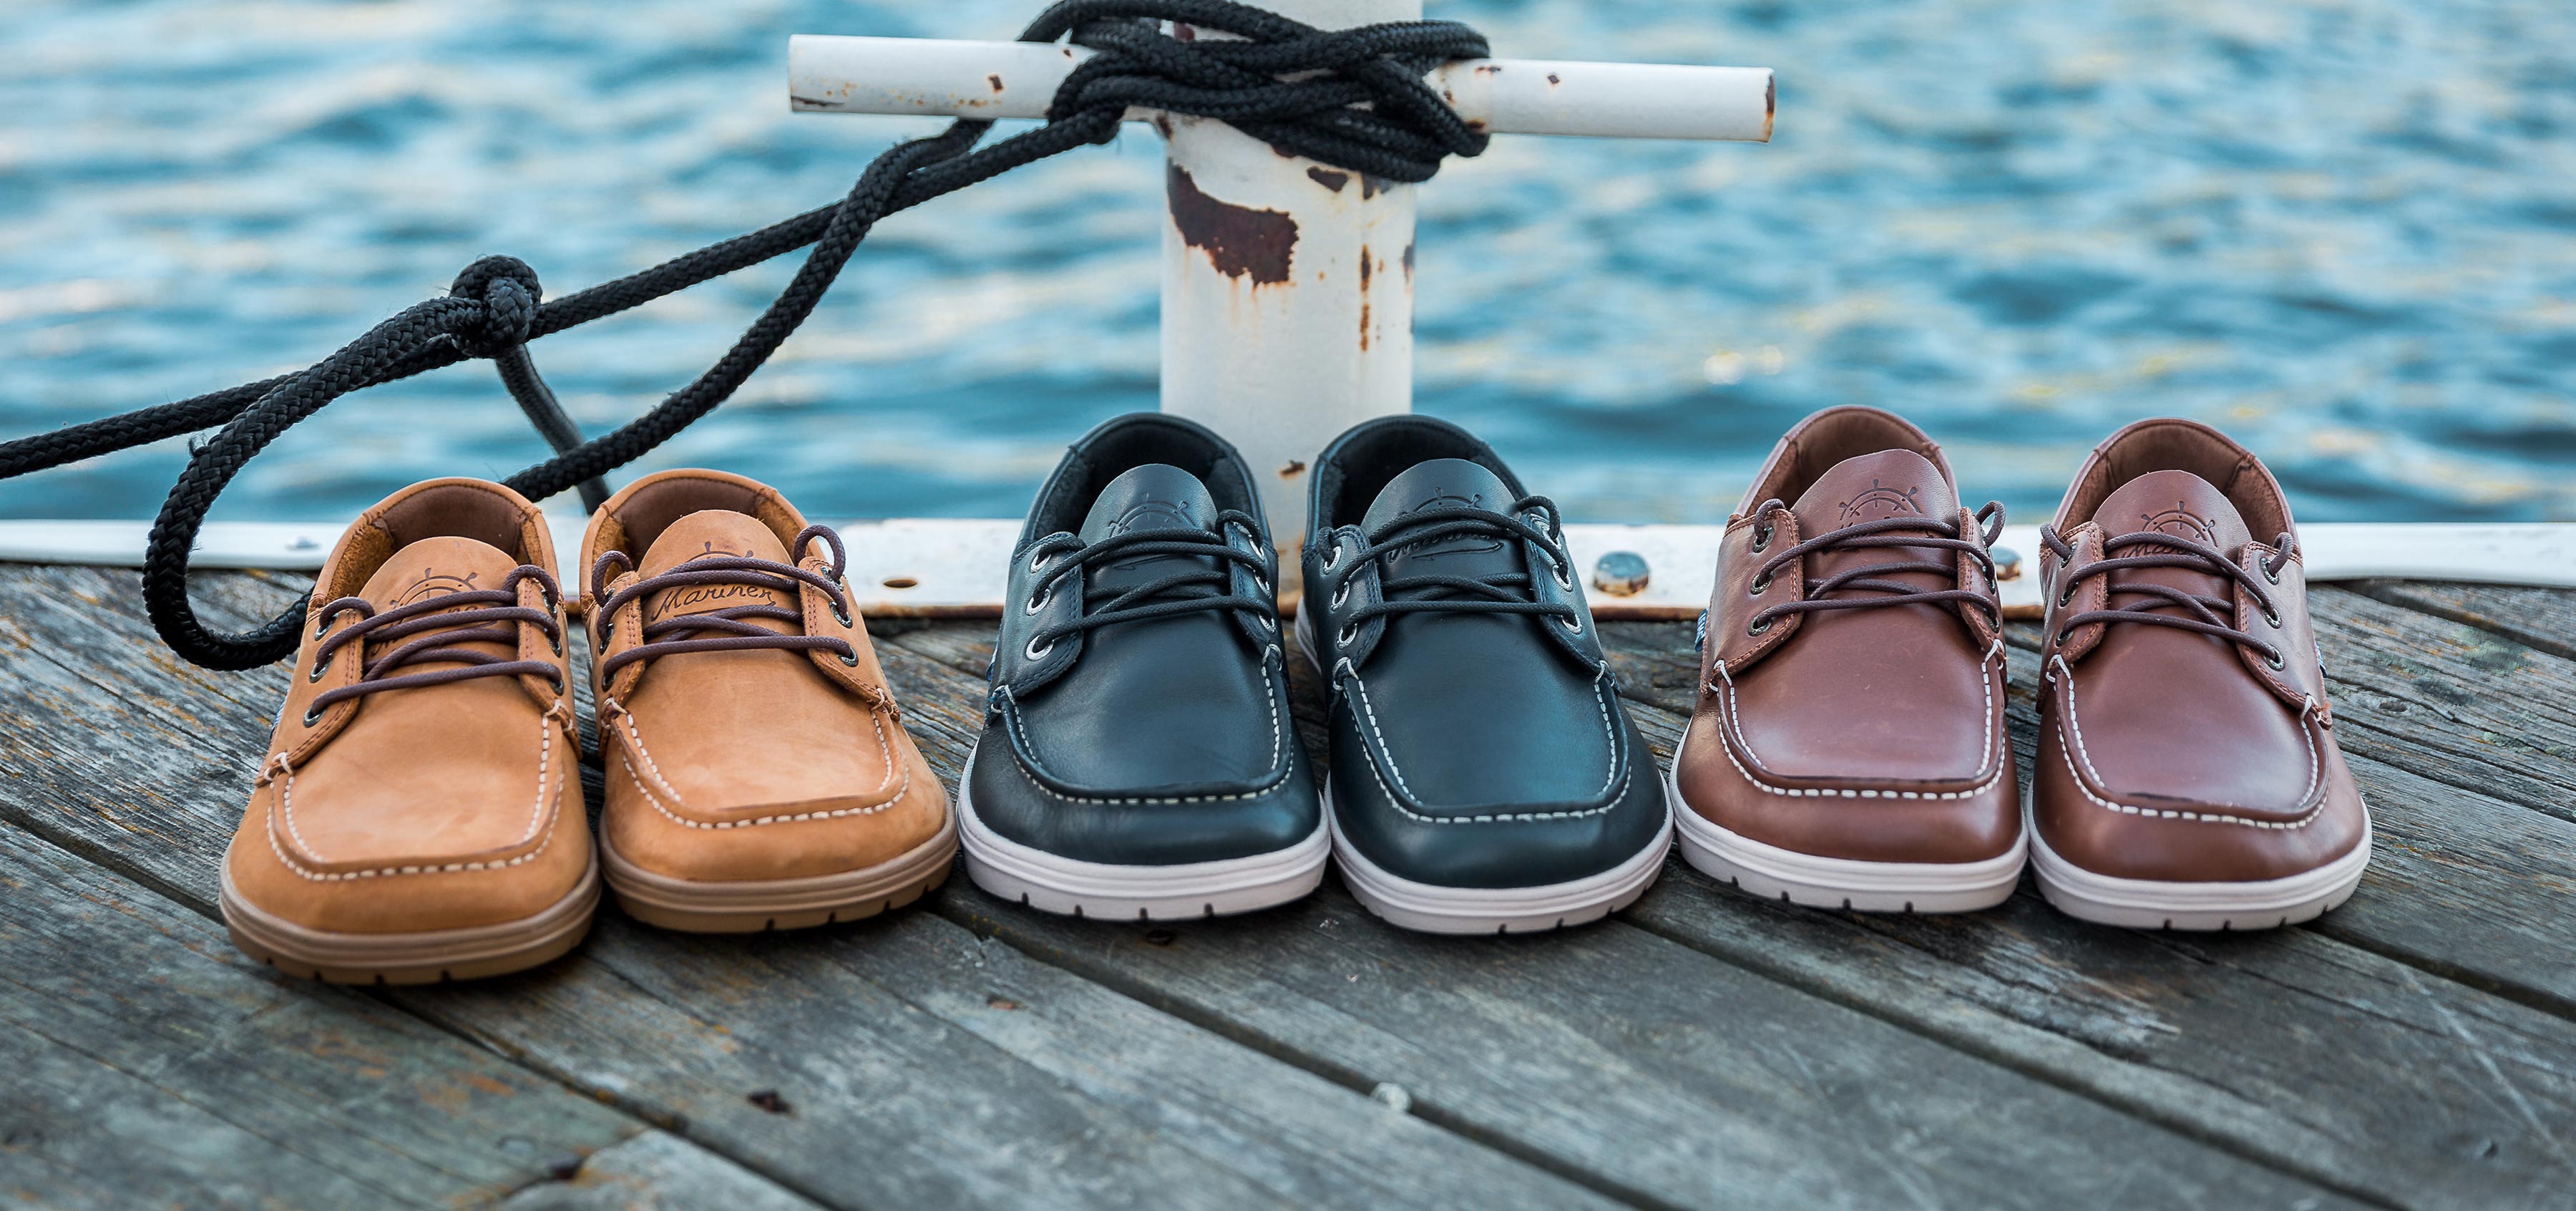 Lems Mariner Boat Shoes  Minimalistic Zero Drop Barefoot Boat